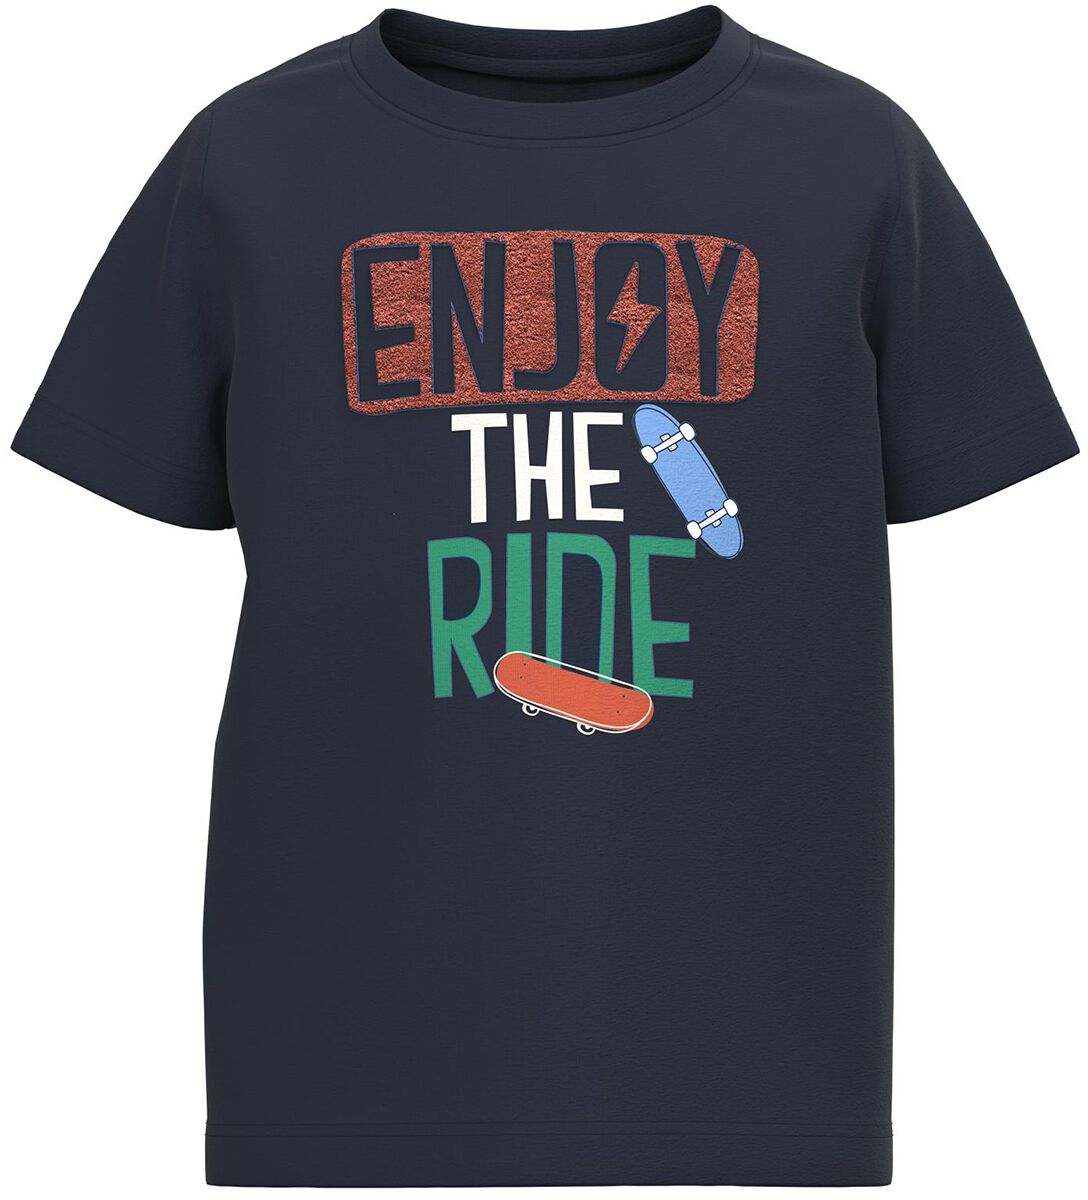 T-shirt de name it - Henne Shirt - Enjoy the ride - 92 à 122/128 - pour garçons - marine